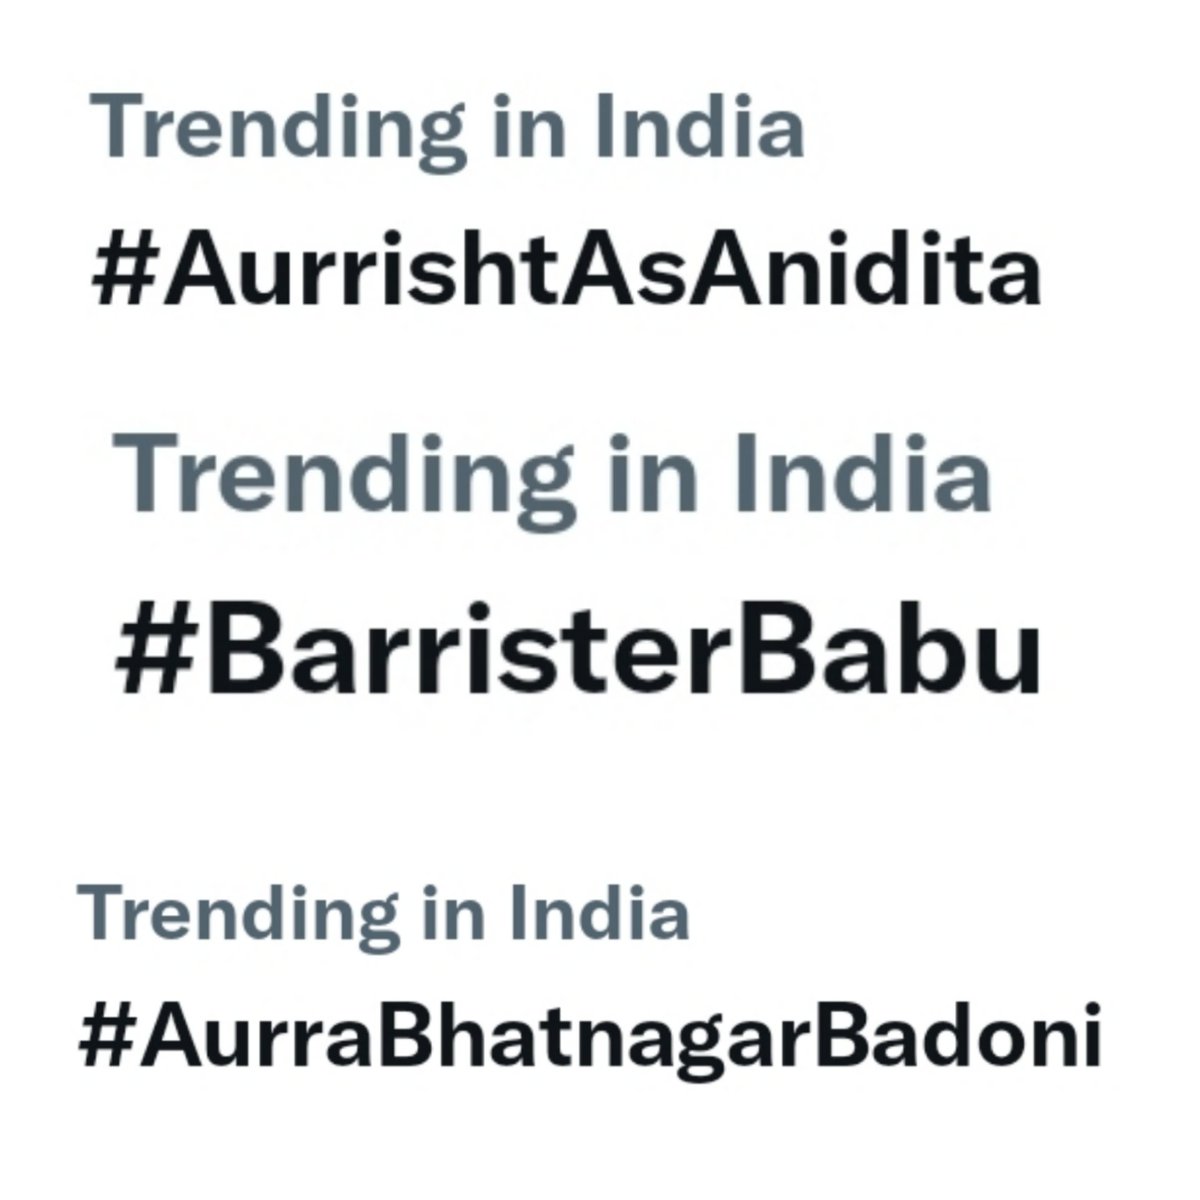 It's trending! 😭❤️
#BarristerBabu #AurrishtAsAnidita